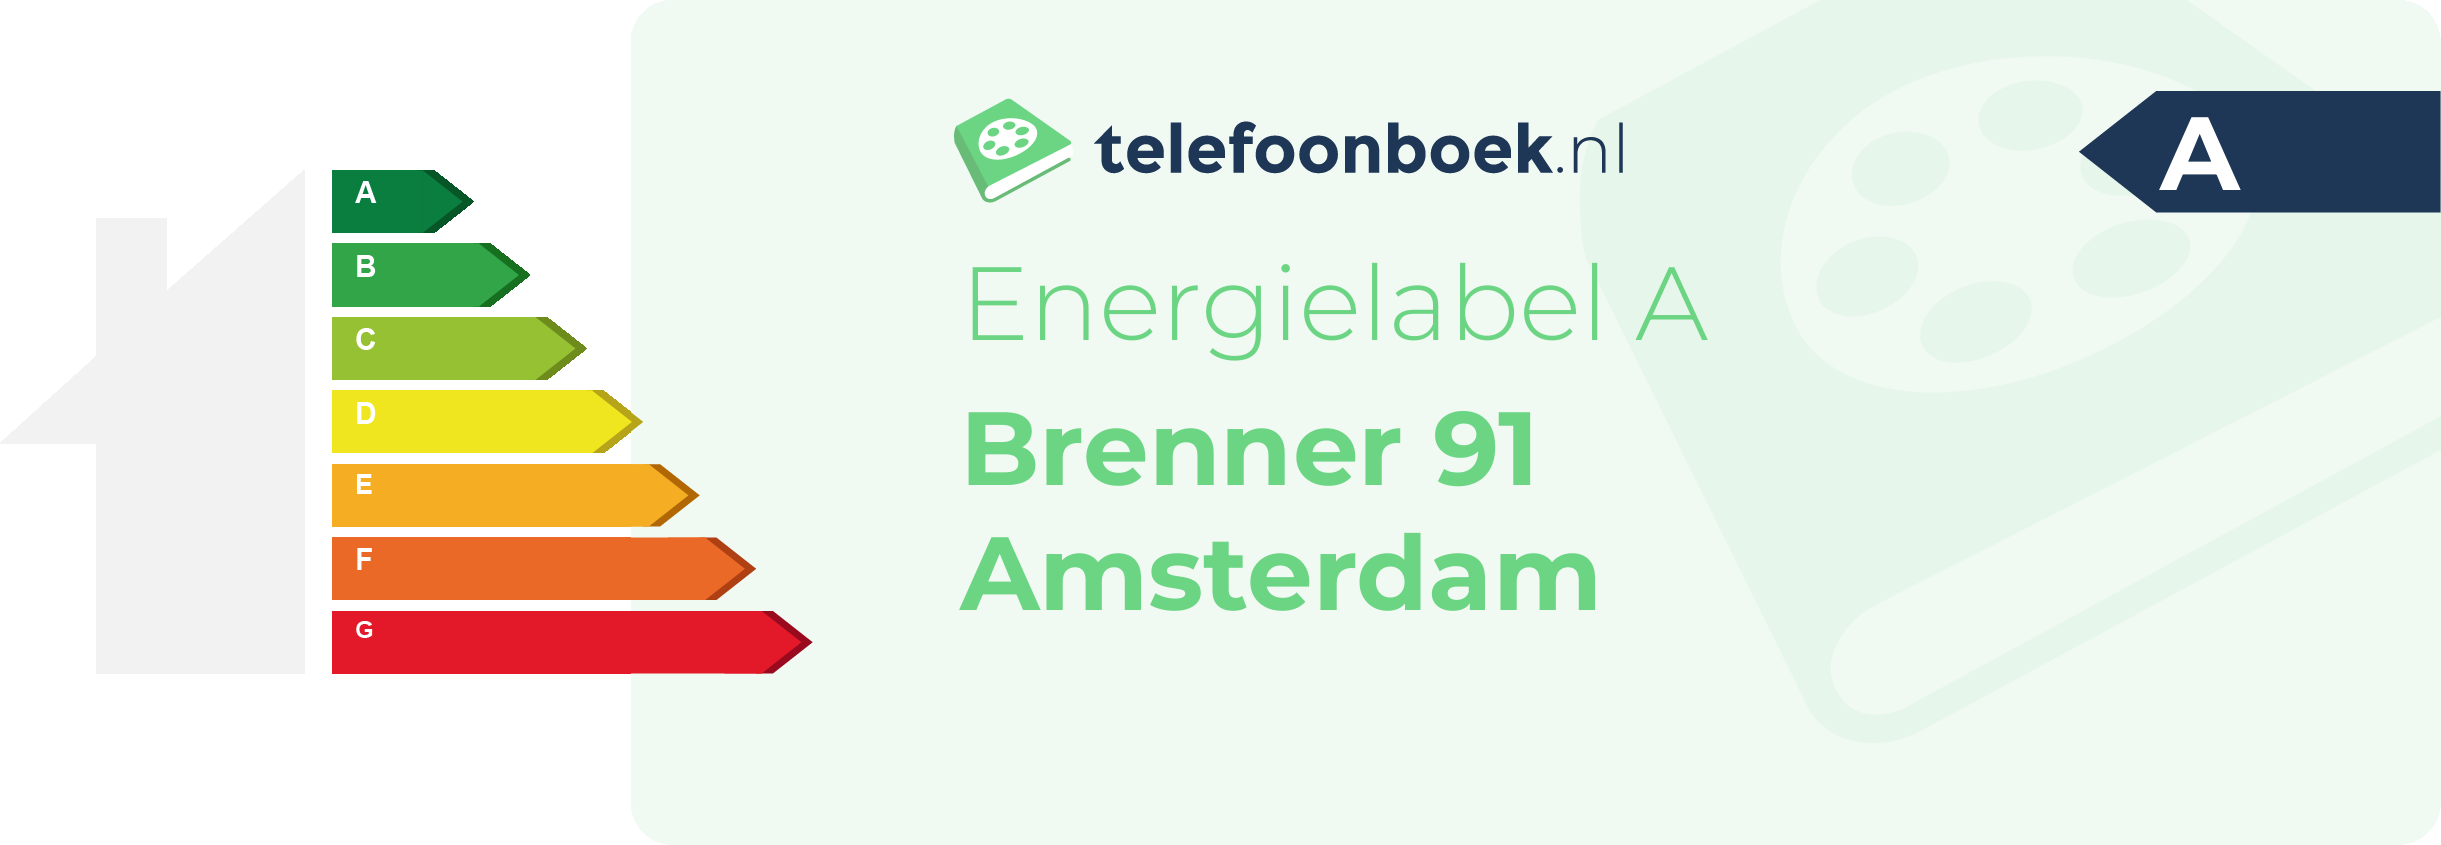 Energielabel Brenner 91 Amsterdam